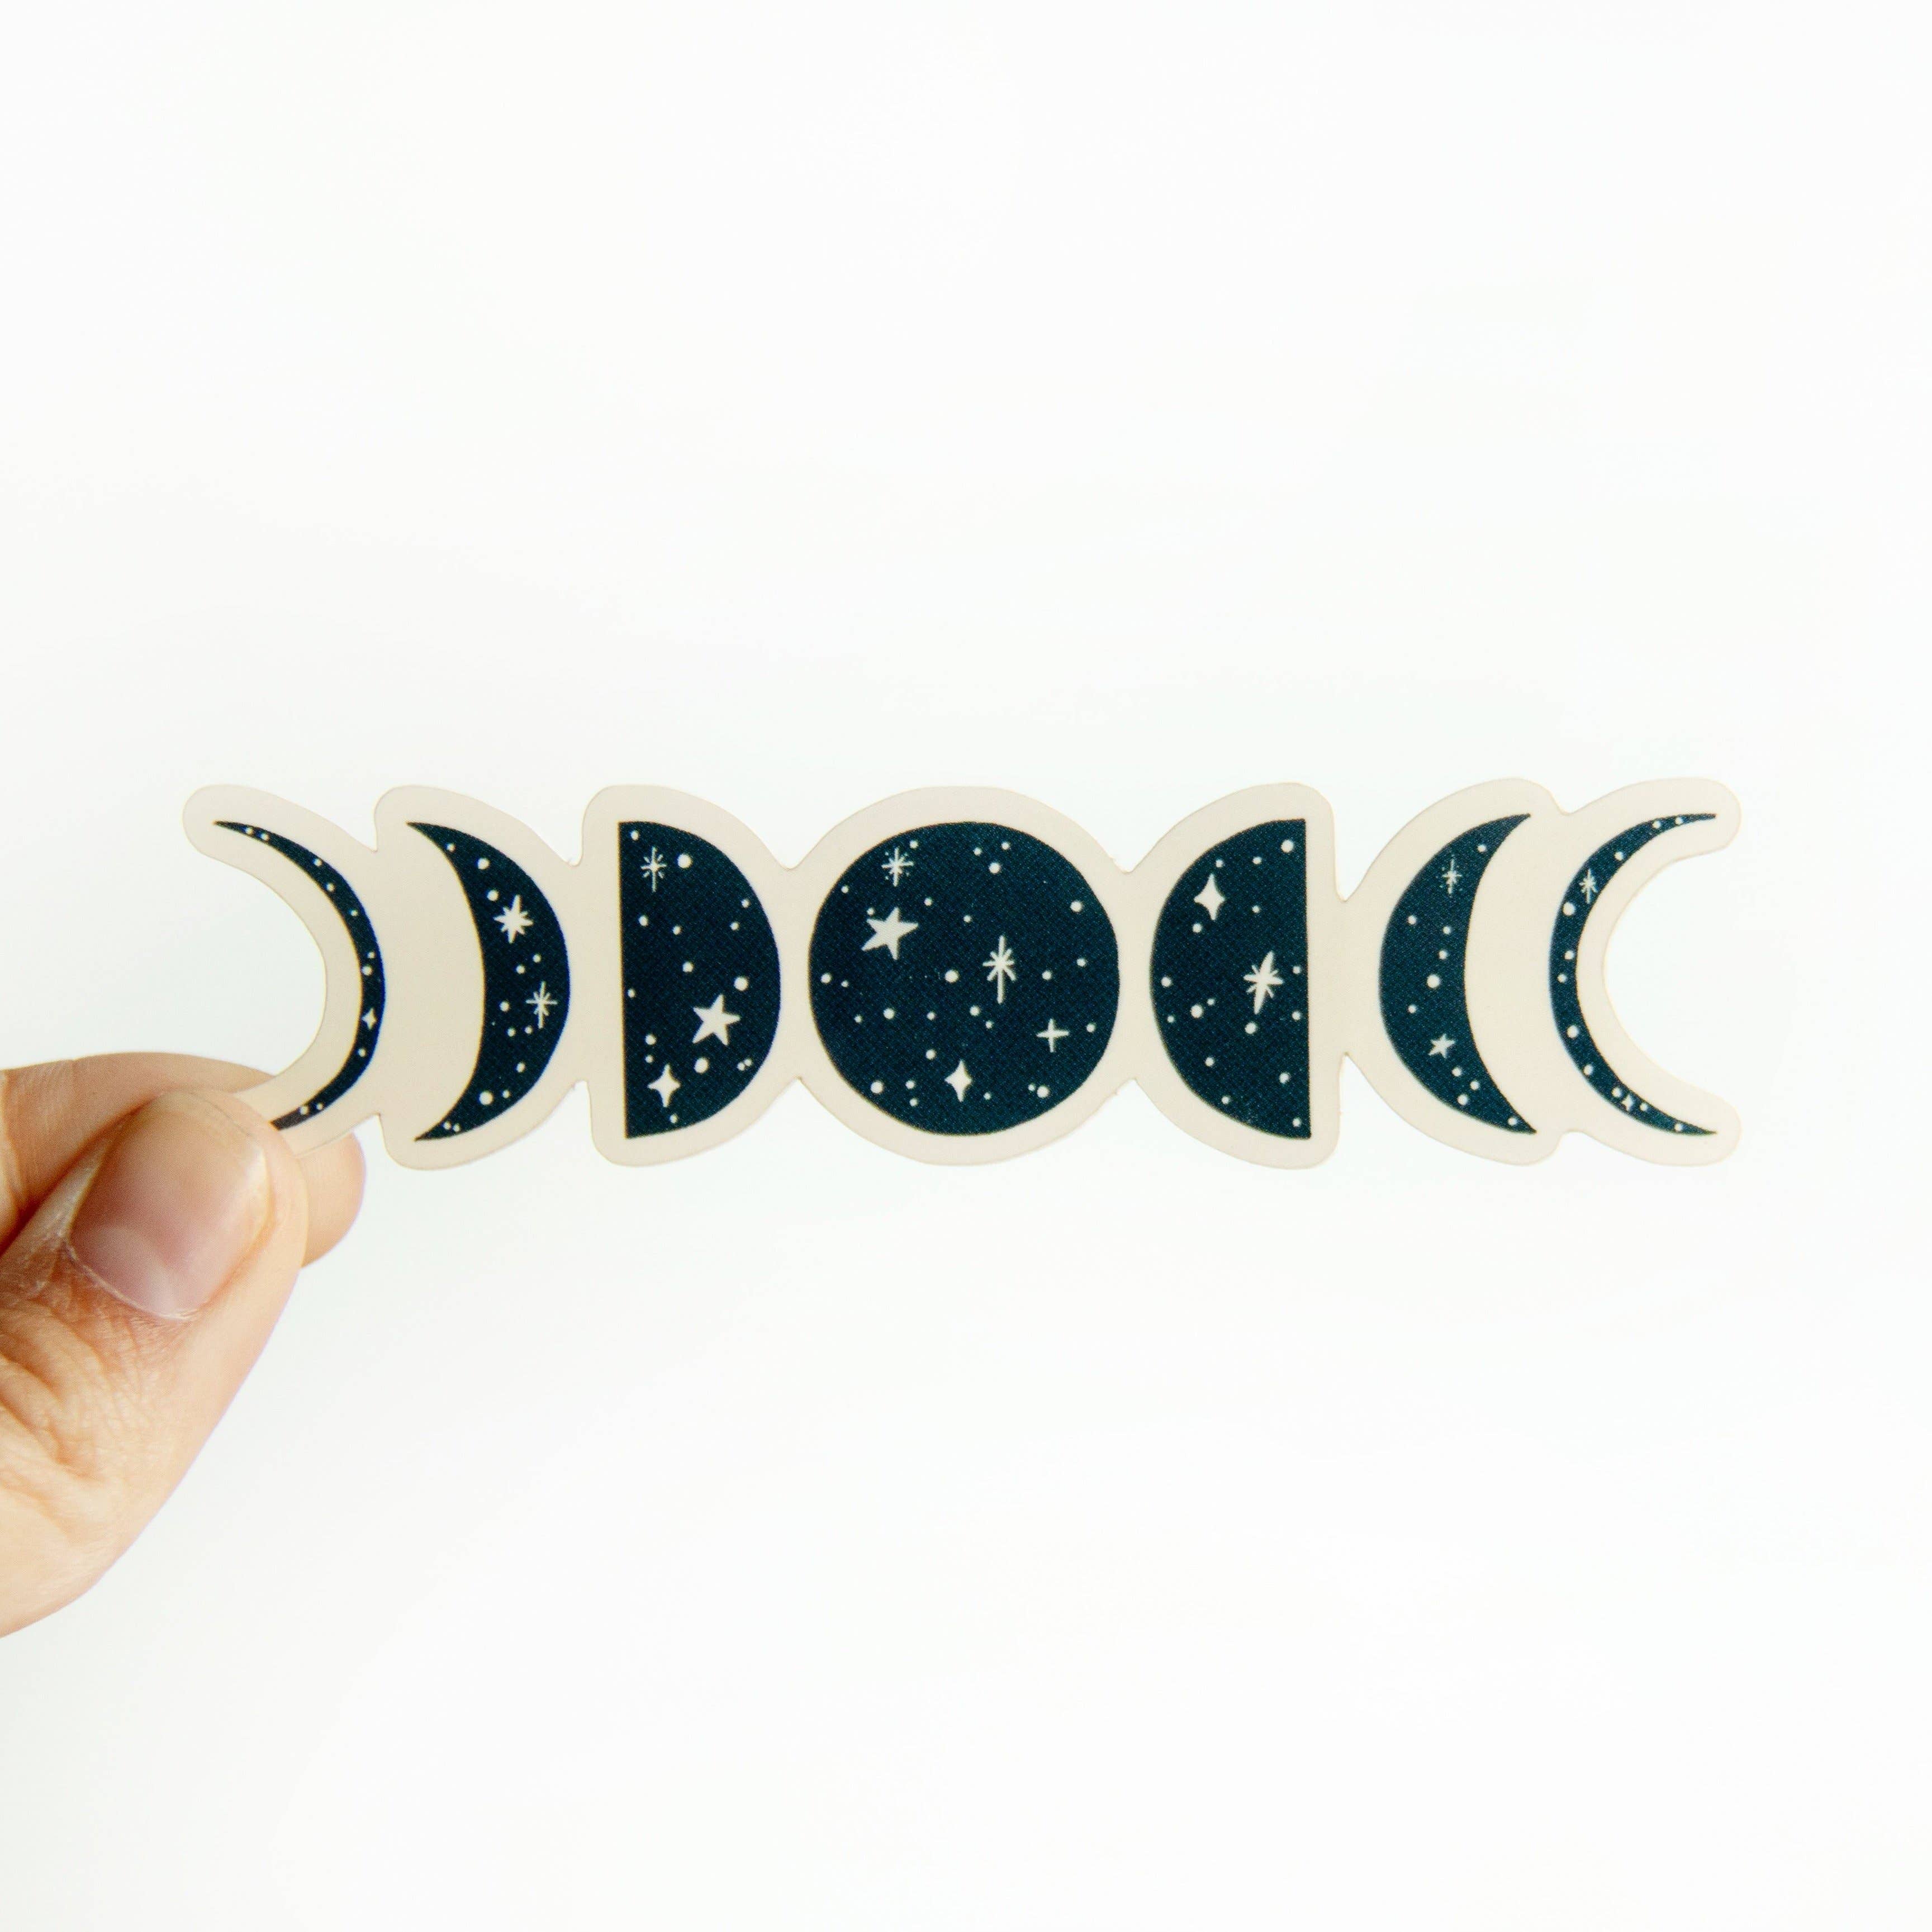 Kulana Stickers - Phases of the Moon - Vinyl Sticker